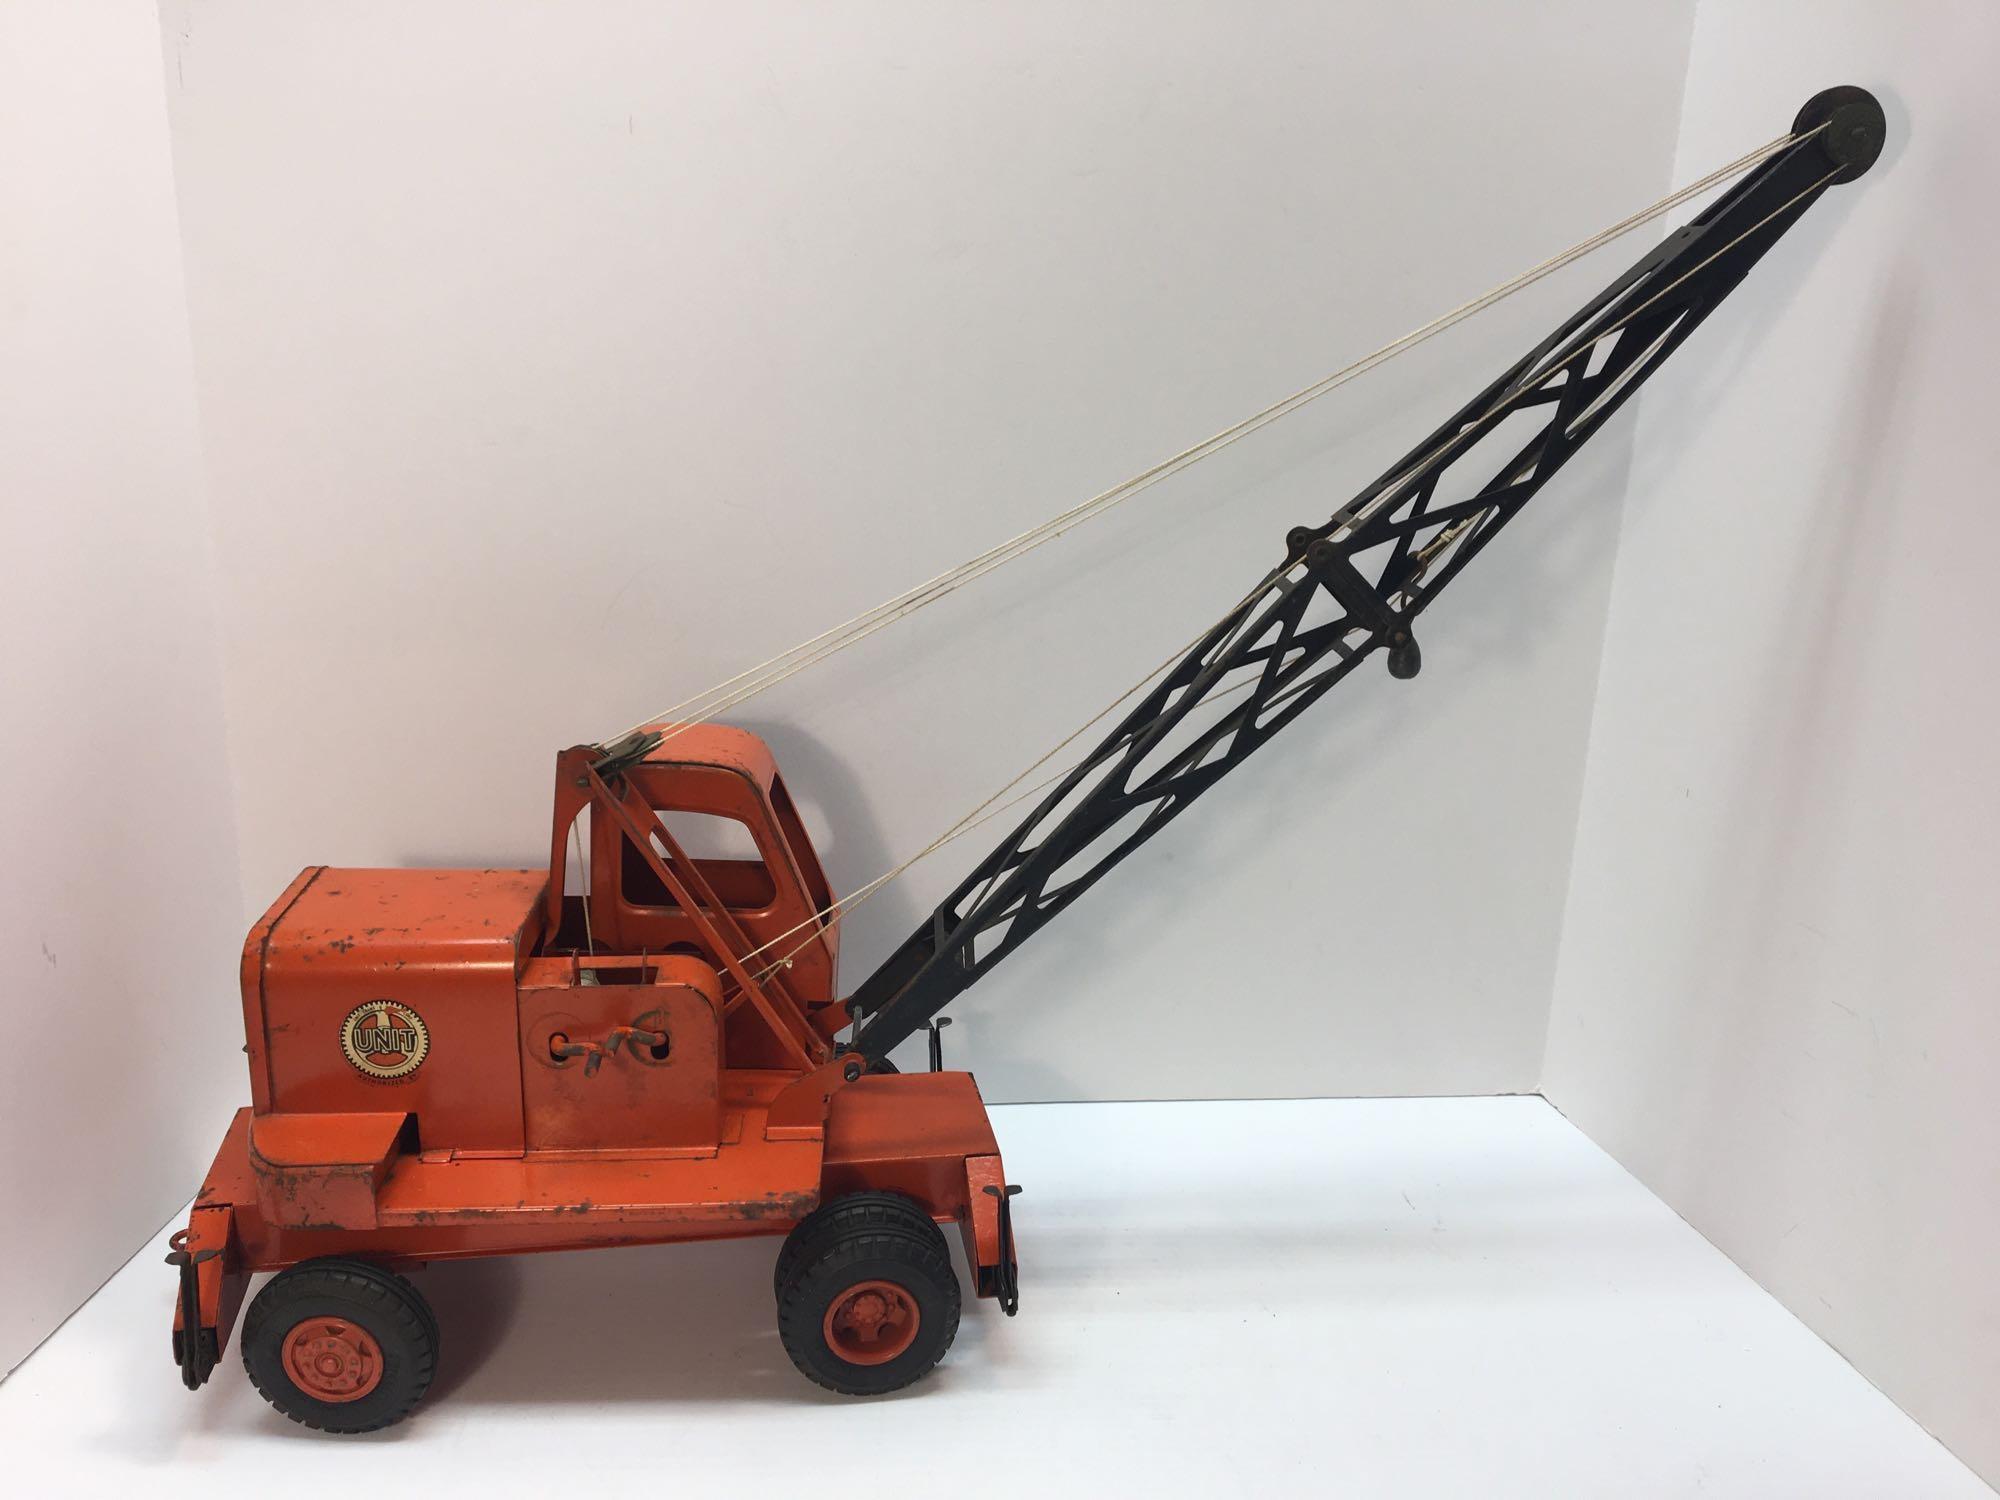 DOEPKE MODEL TOYS pressed metal "UNIT" crane